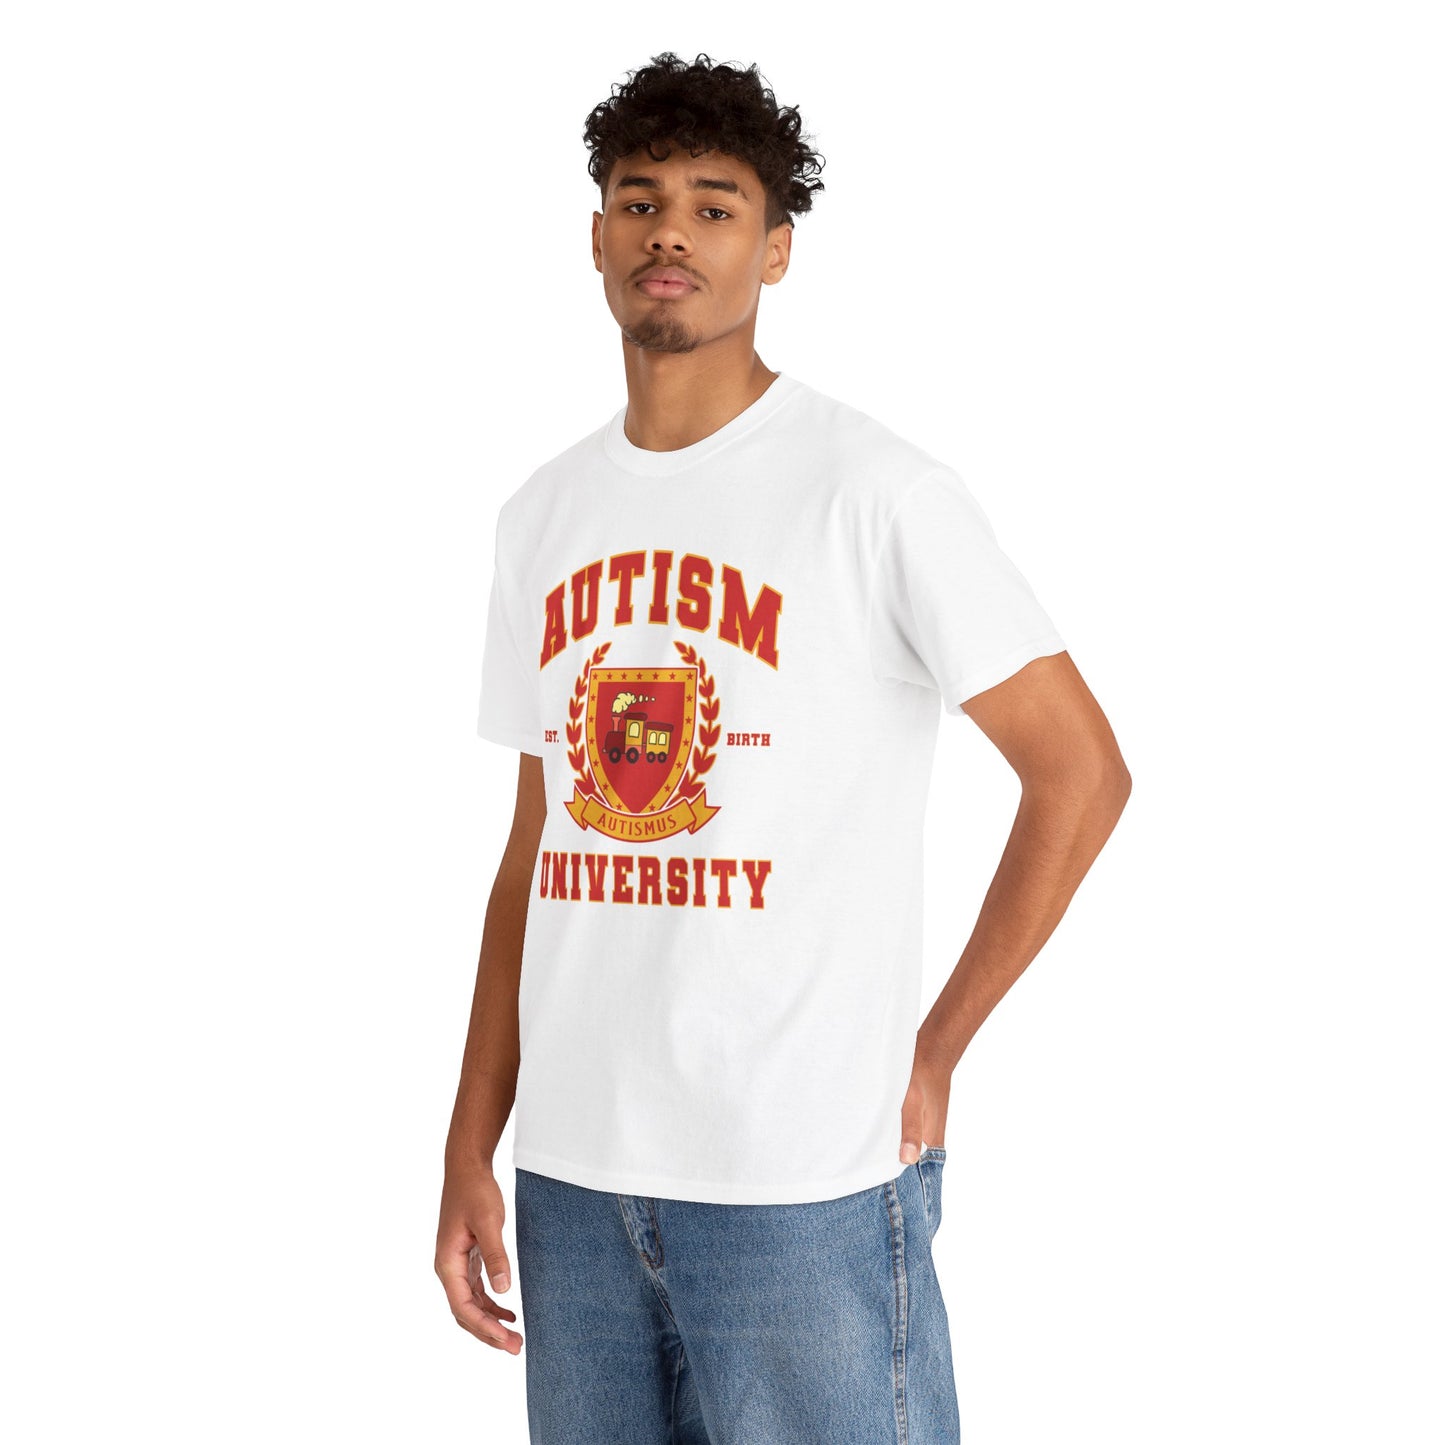 Autism University T-Shirt!